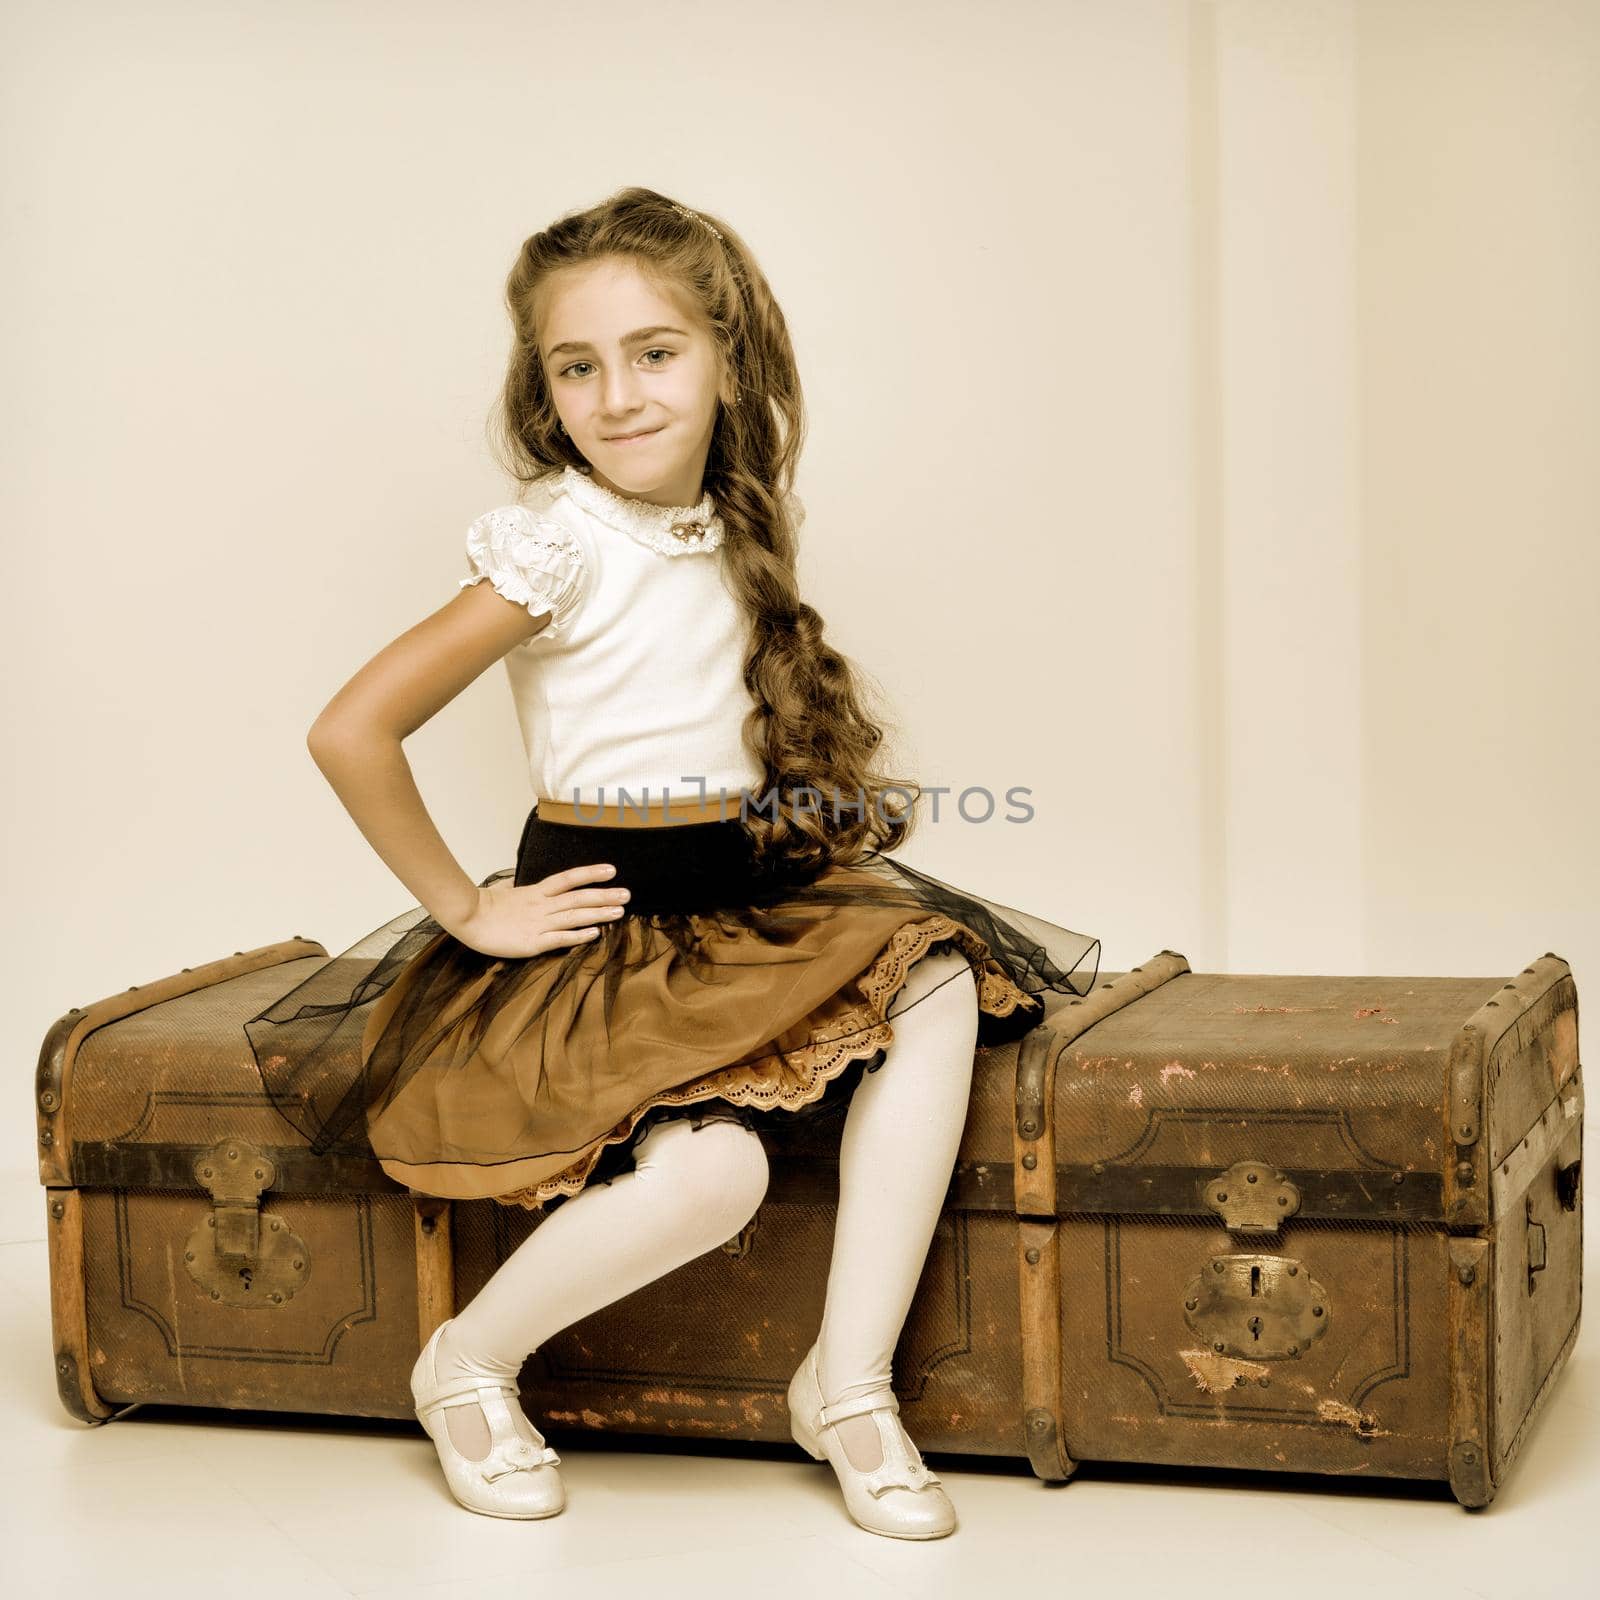 A little girl is sitting on a wooden box. by kolesnikov_studio